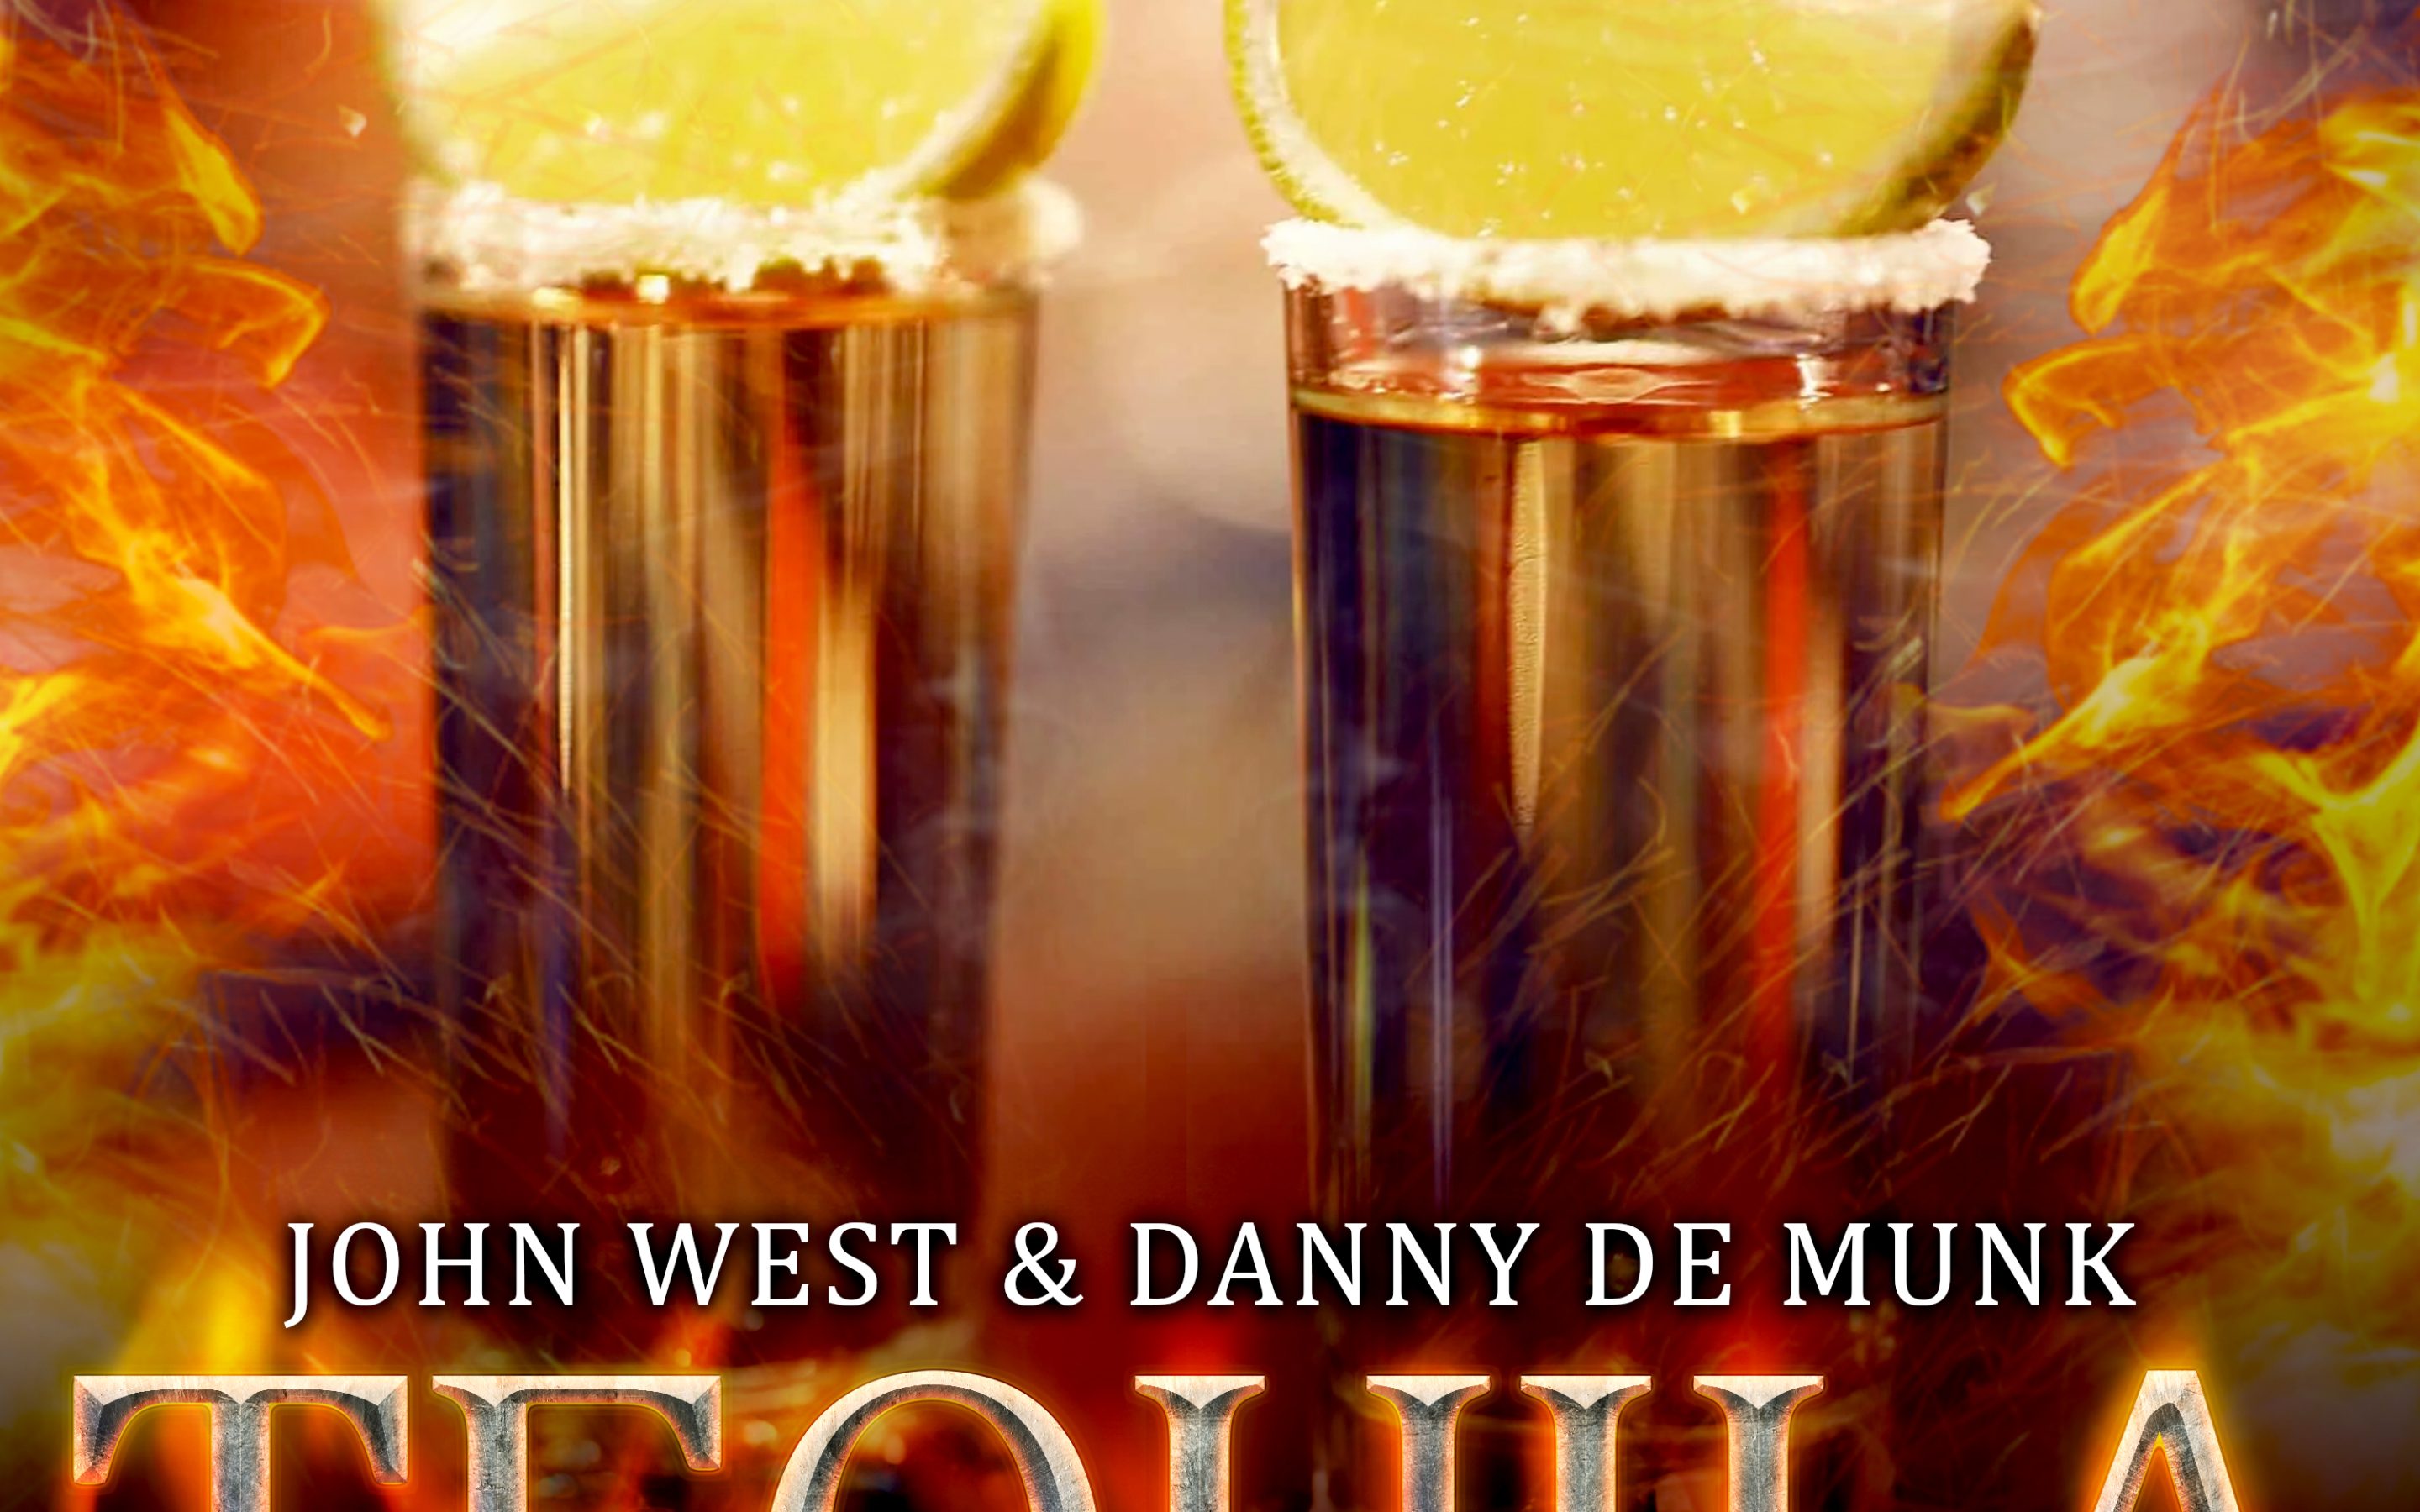 John West & Danny de Munk – Tequila